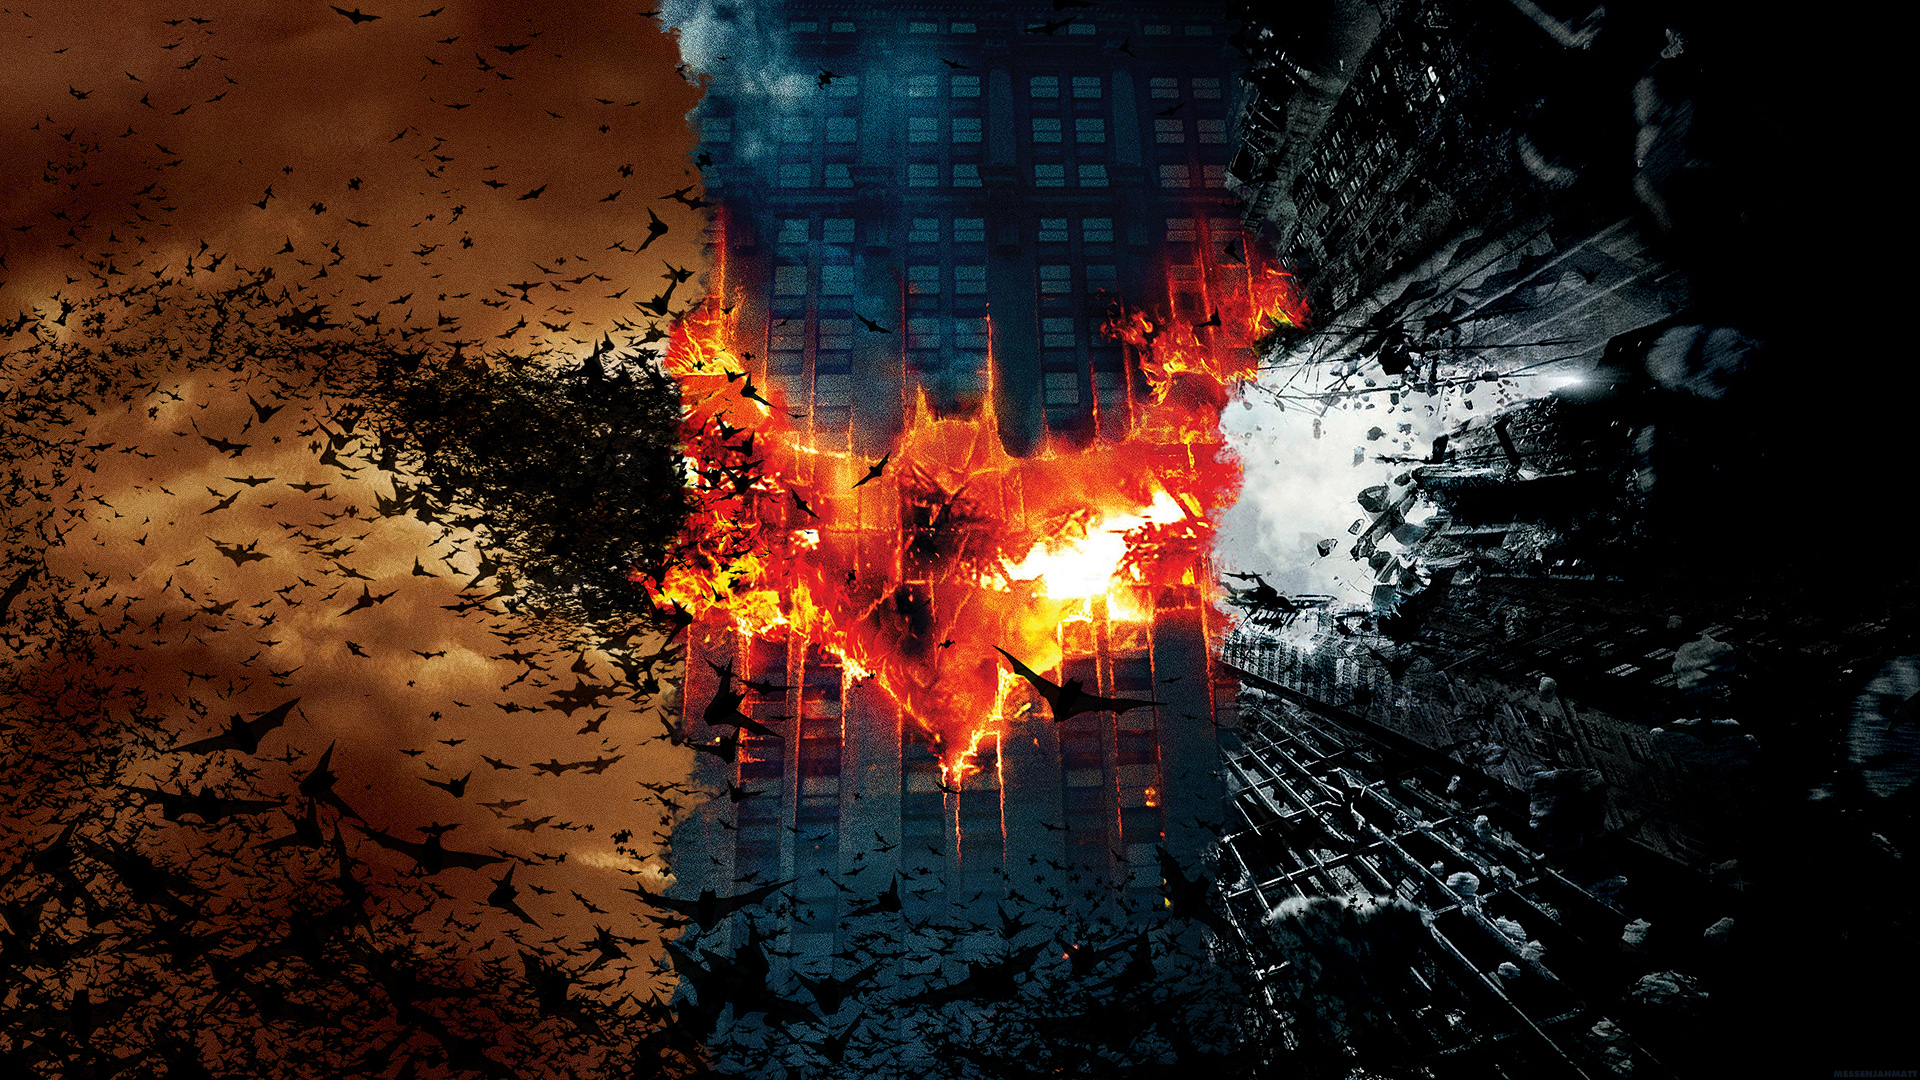 The Dark Knight Rises HD Wallpaper And Desktop Background